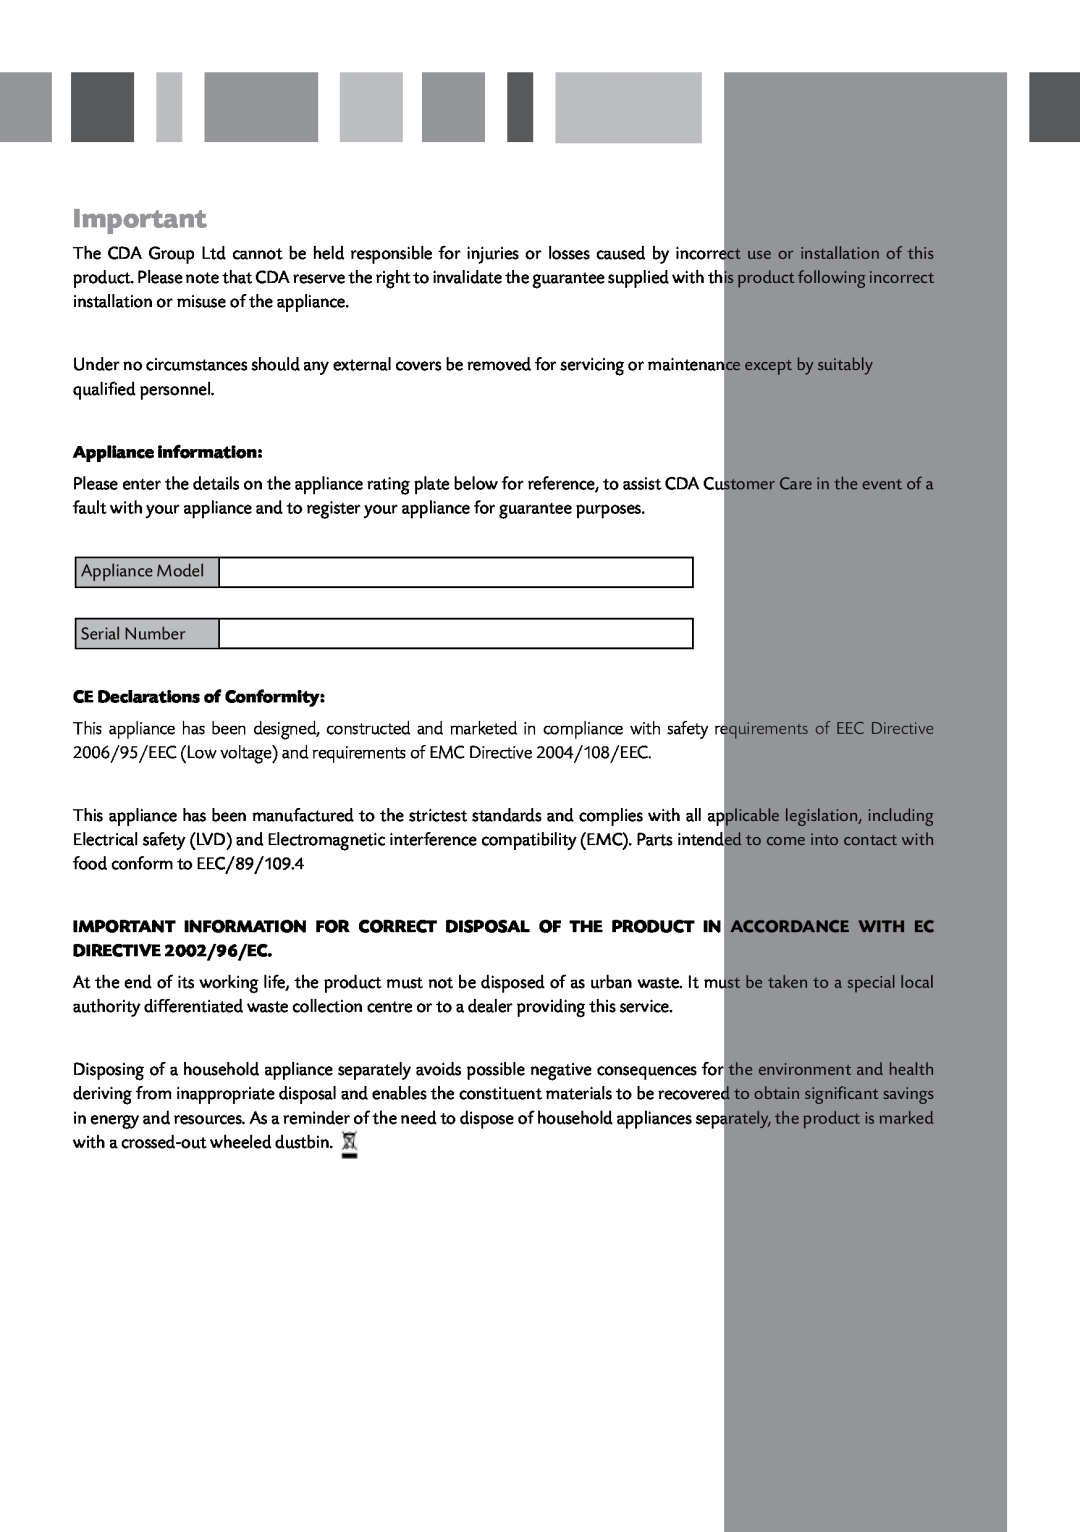 CDA FF850 manual Appliance information, CE Declarations of Conformity 